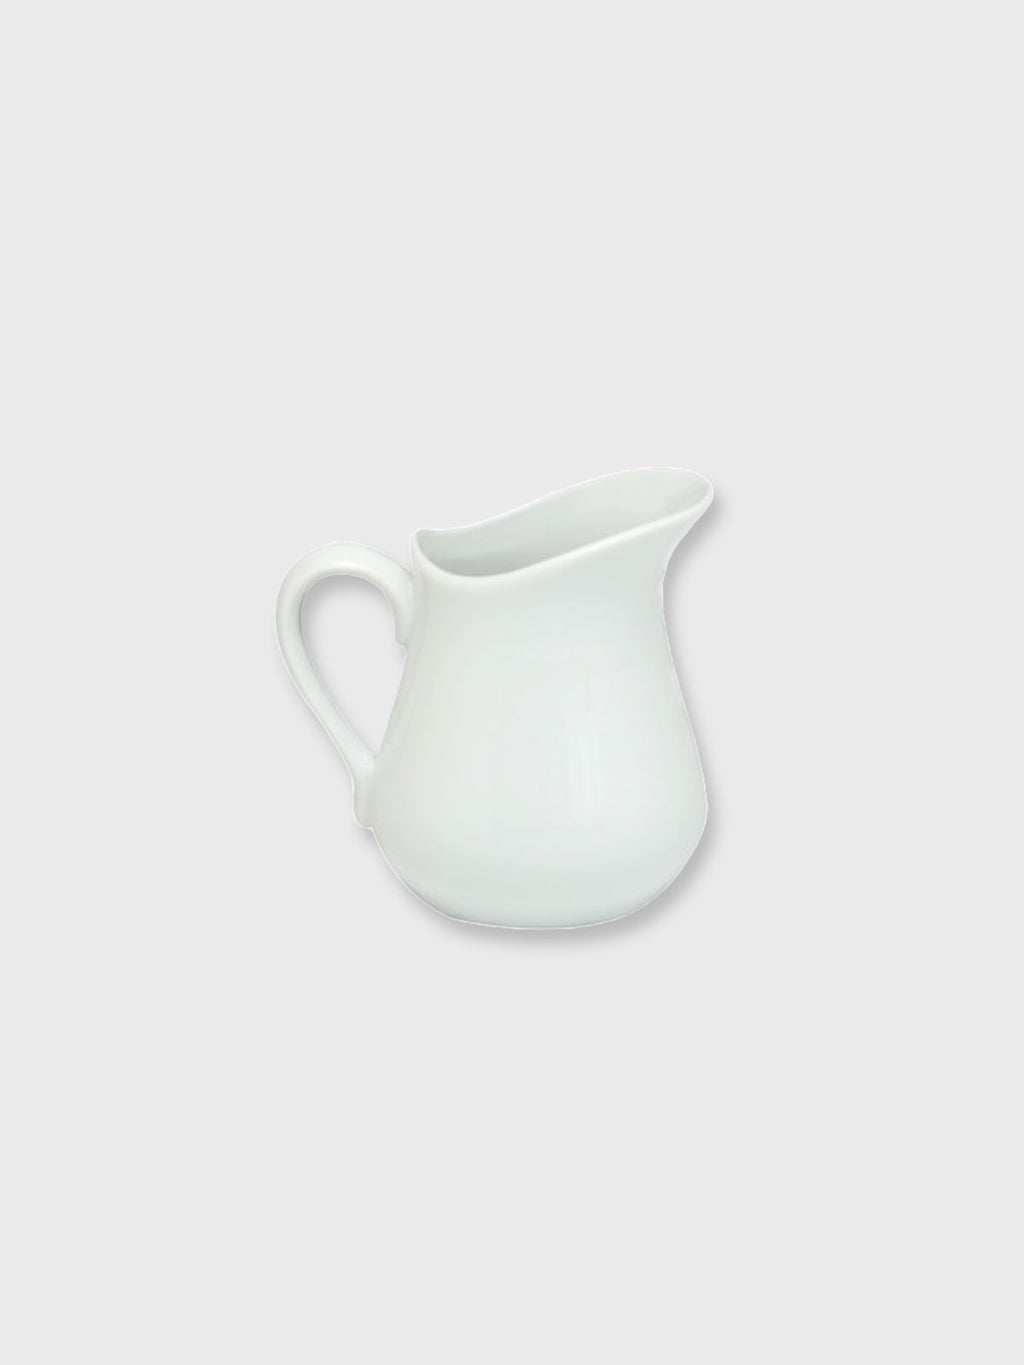 Fine Porcelain White Jug - 0.125 litres